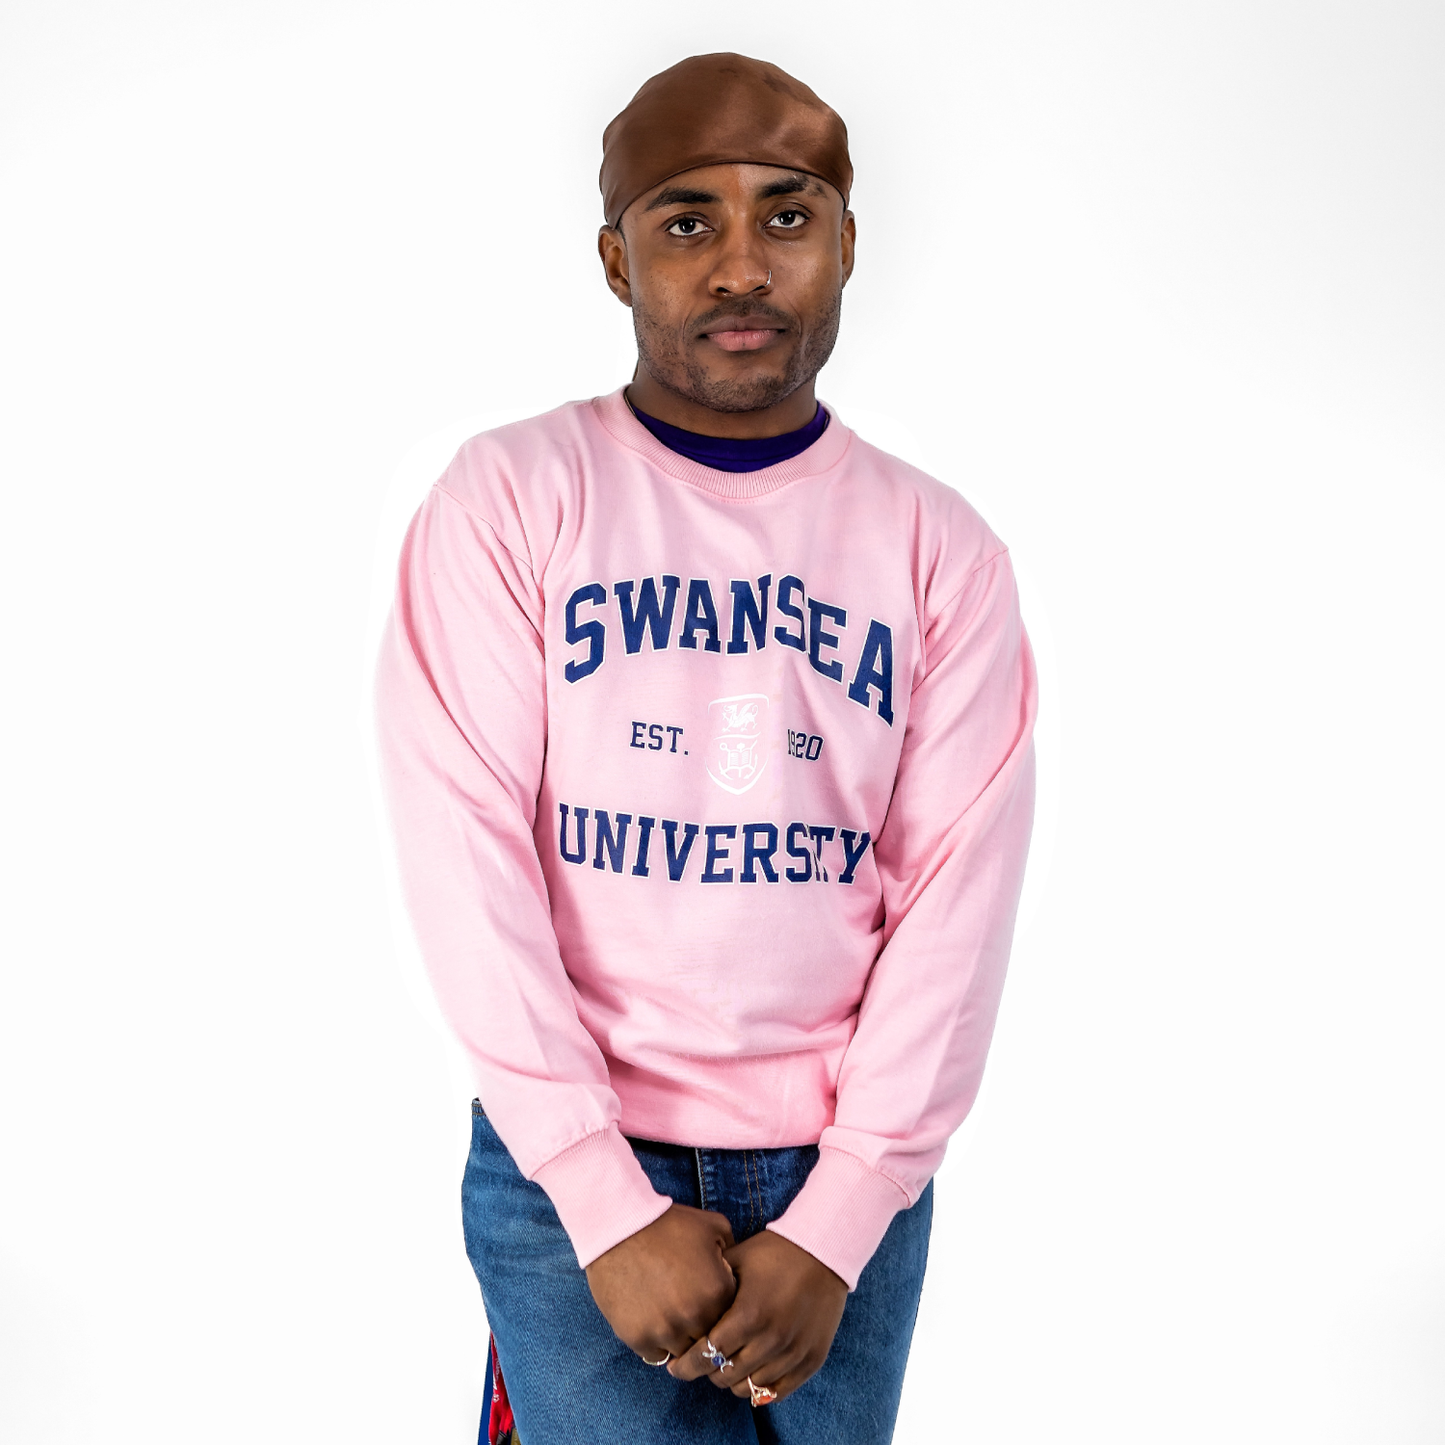 Swansea University Sweatshirt - Classic Comfort